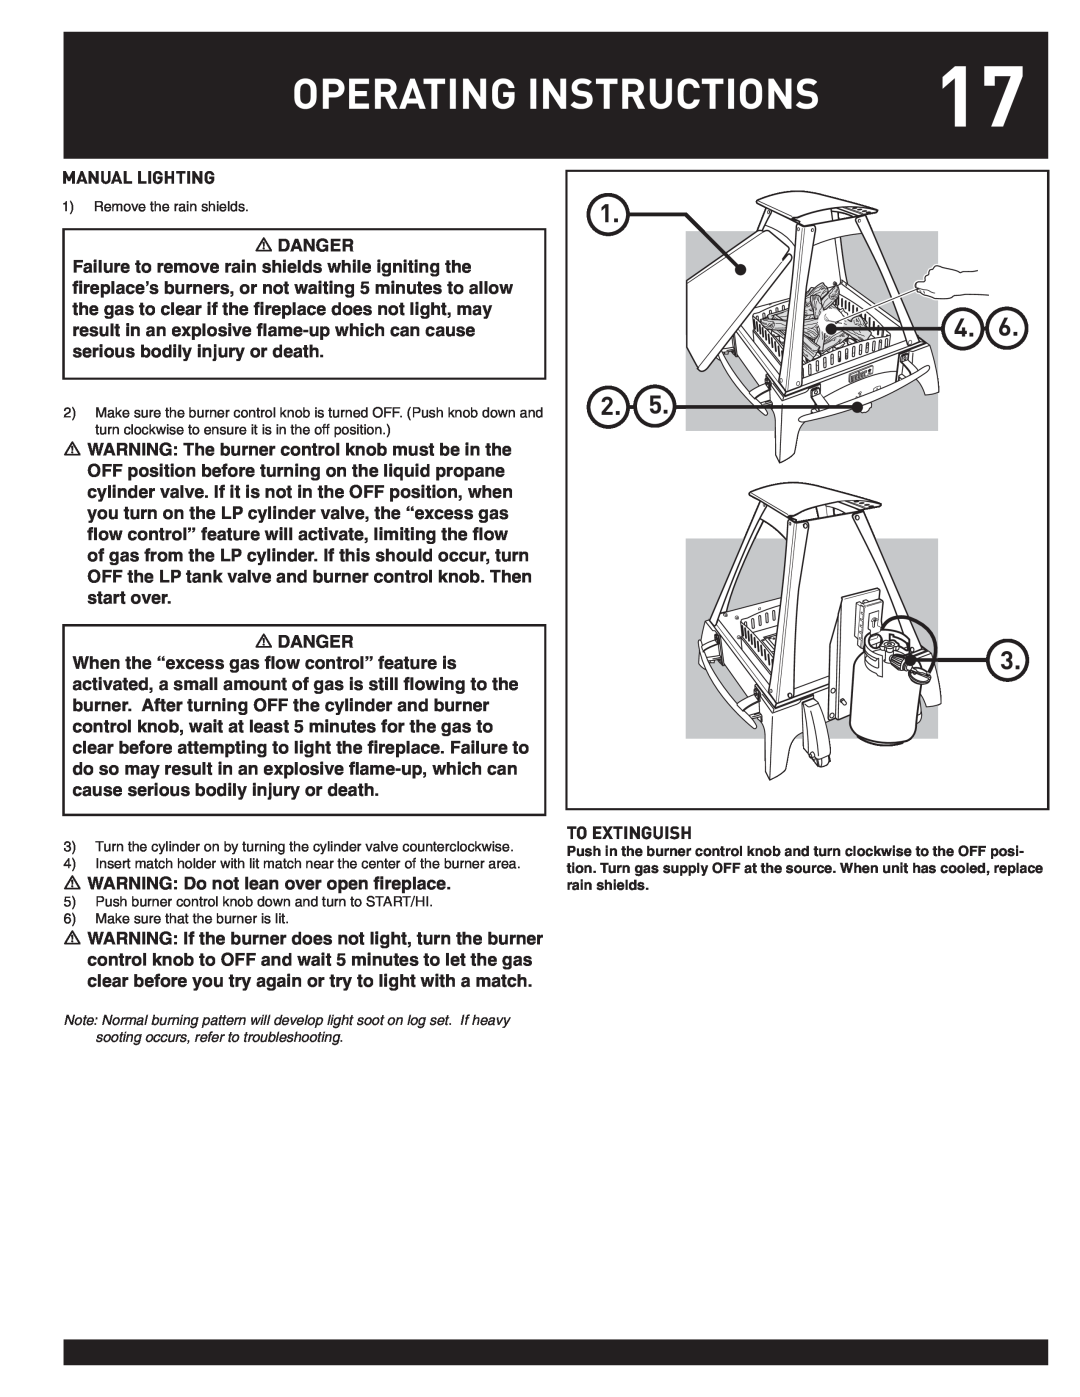 Weber #43028 manual Operating Instructions, Manual Lighting 